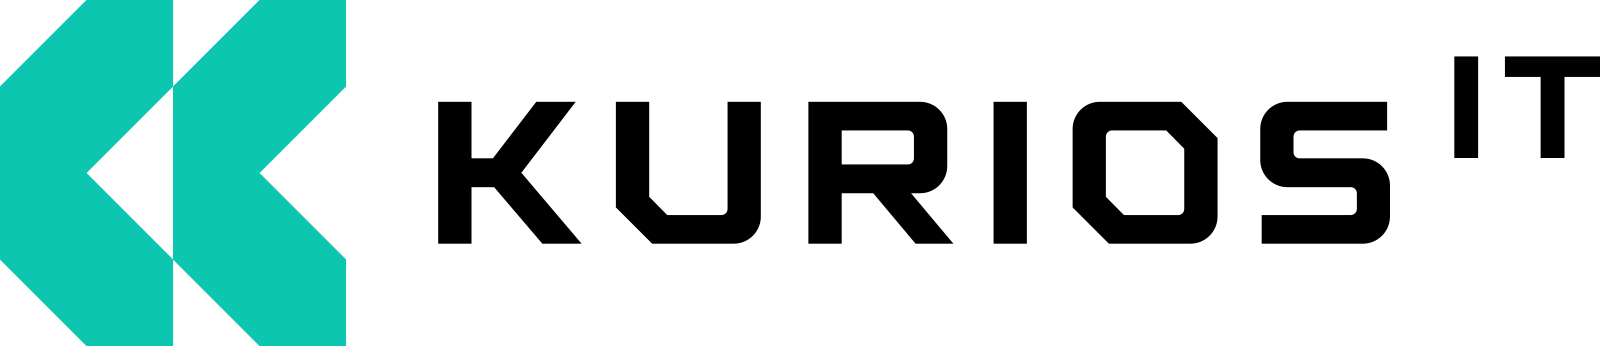 KuriosIT Logo RGB Coul